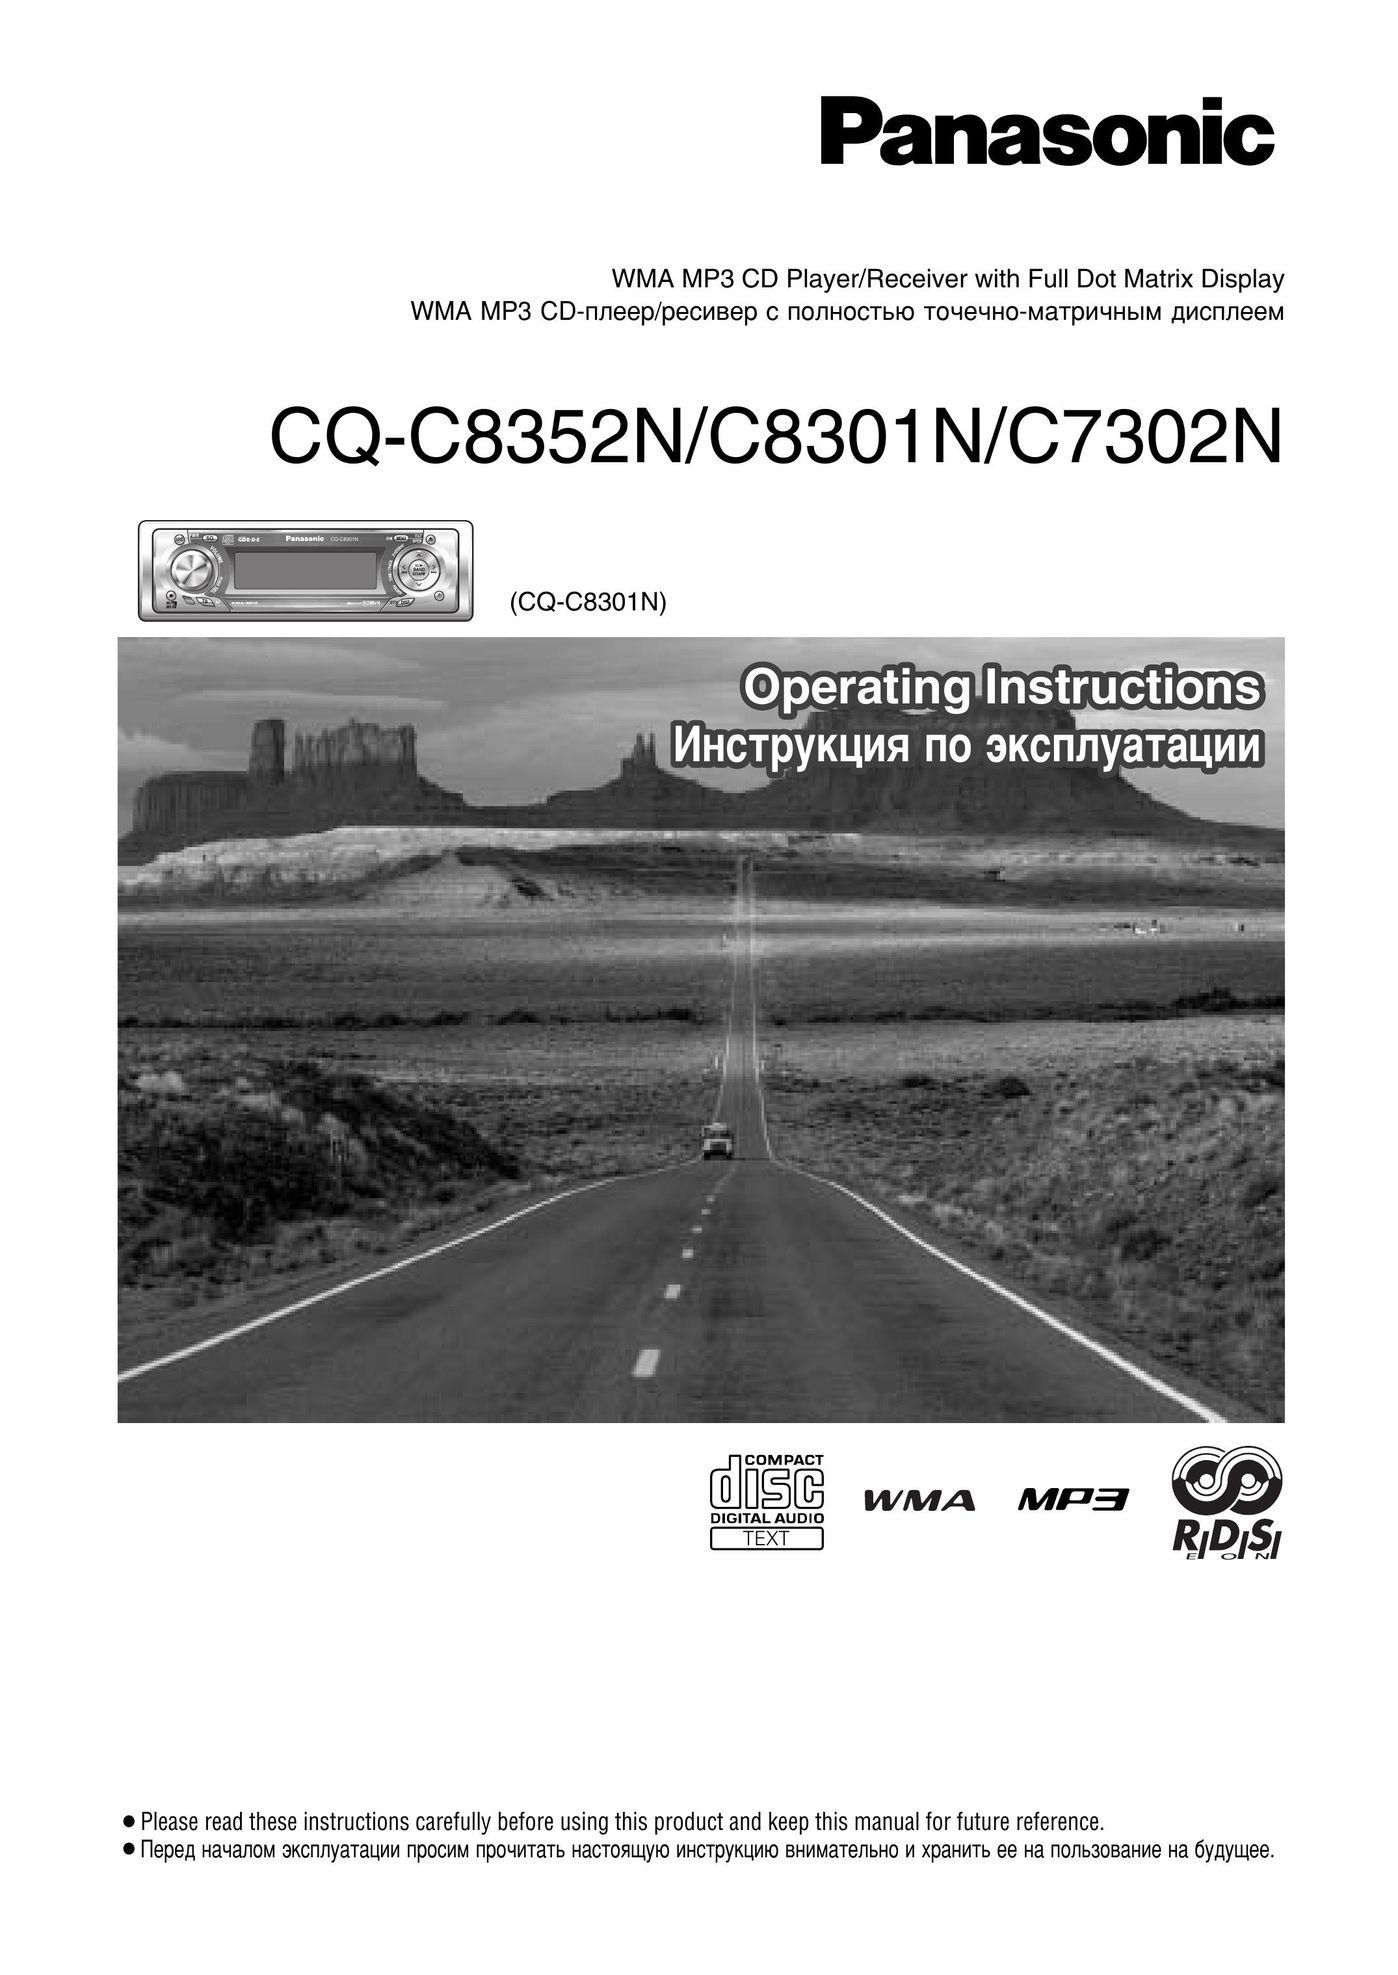 Panasonic CQ-C7302N MP3 Player User Manual